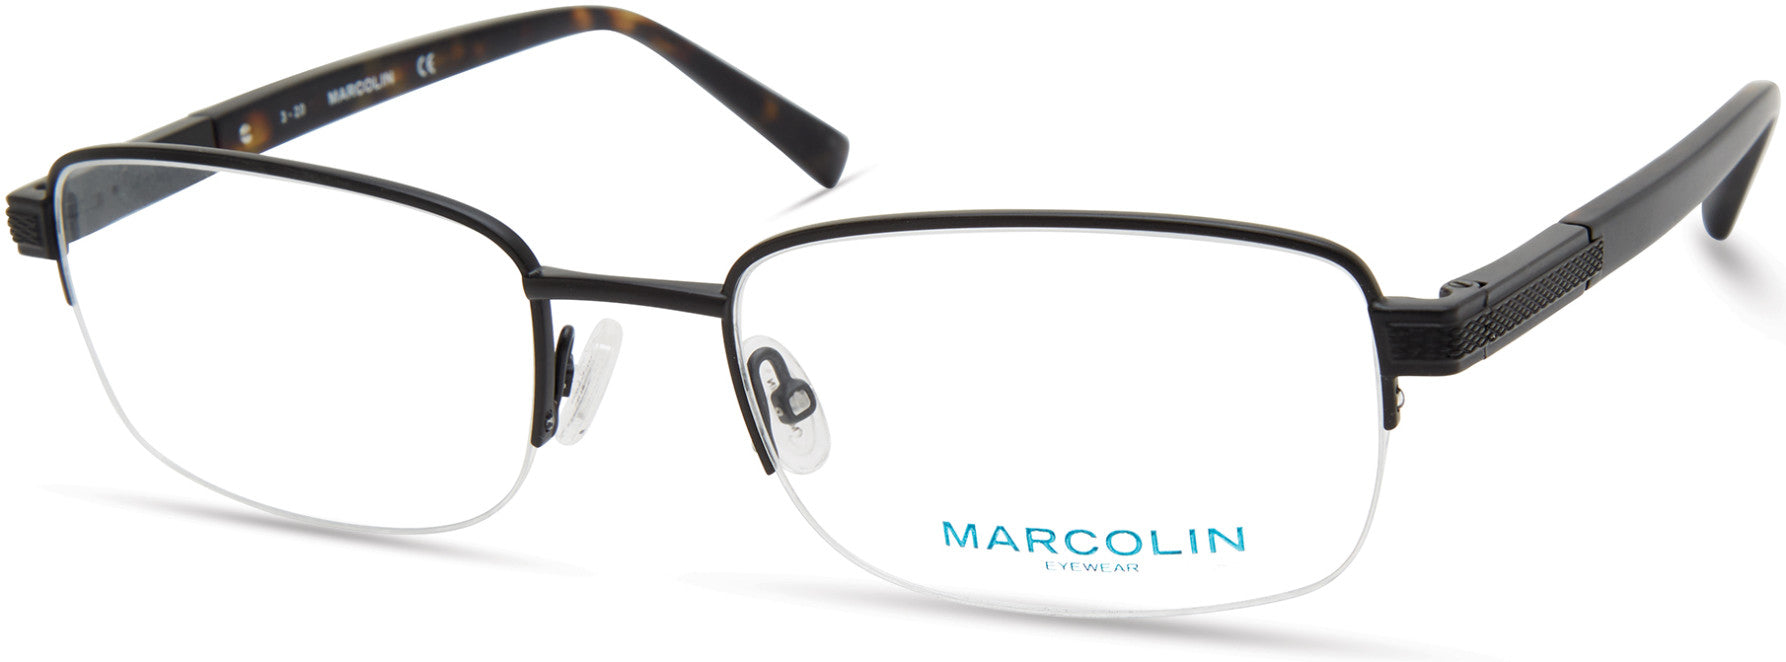 Marcolin MA3026 Rectangular Eyeglasses 002-002 - Matte Black